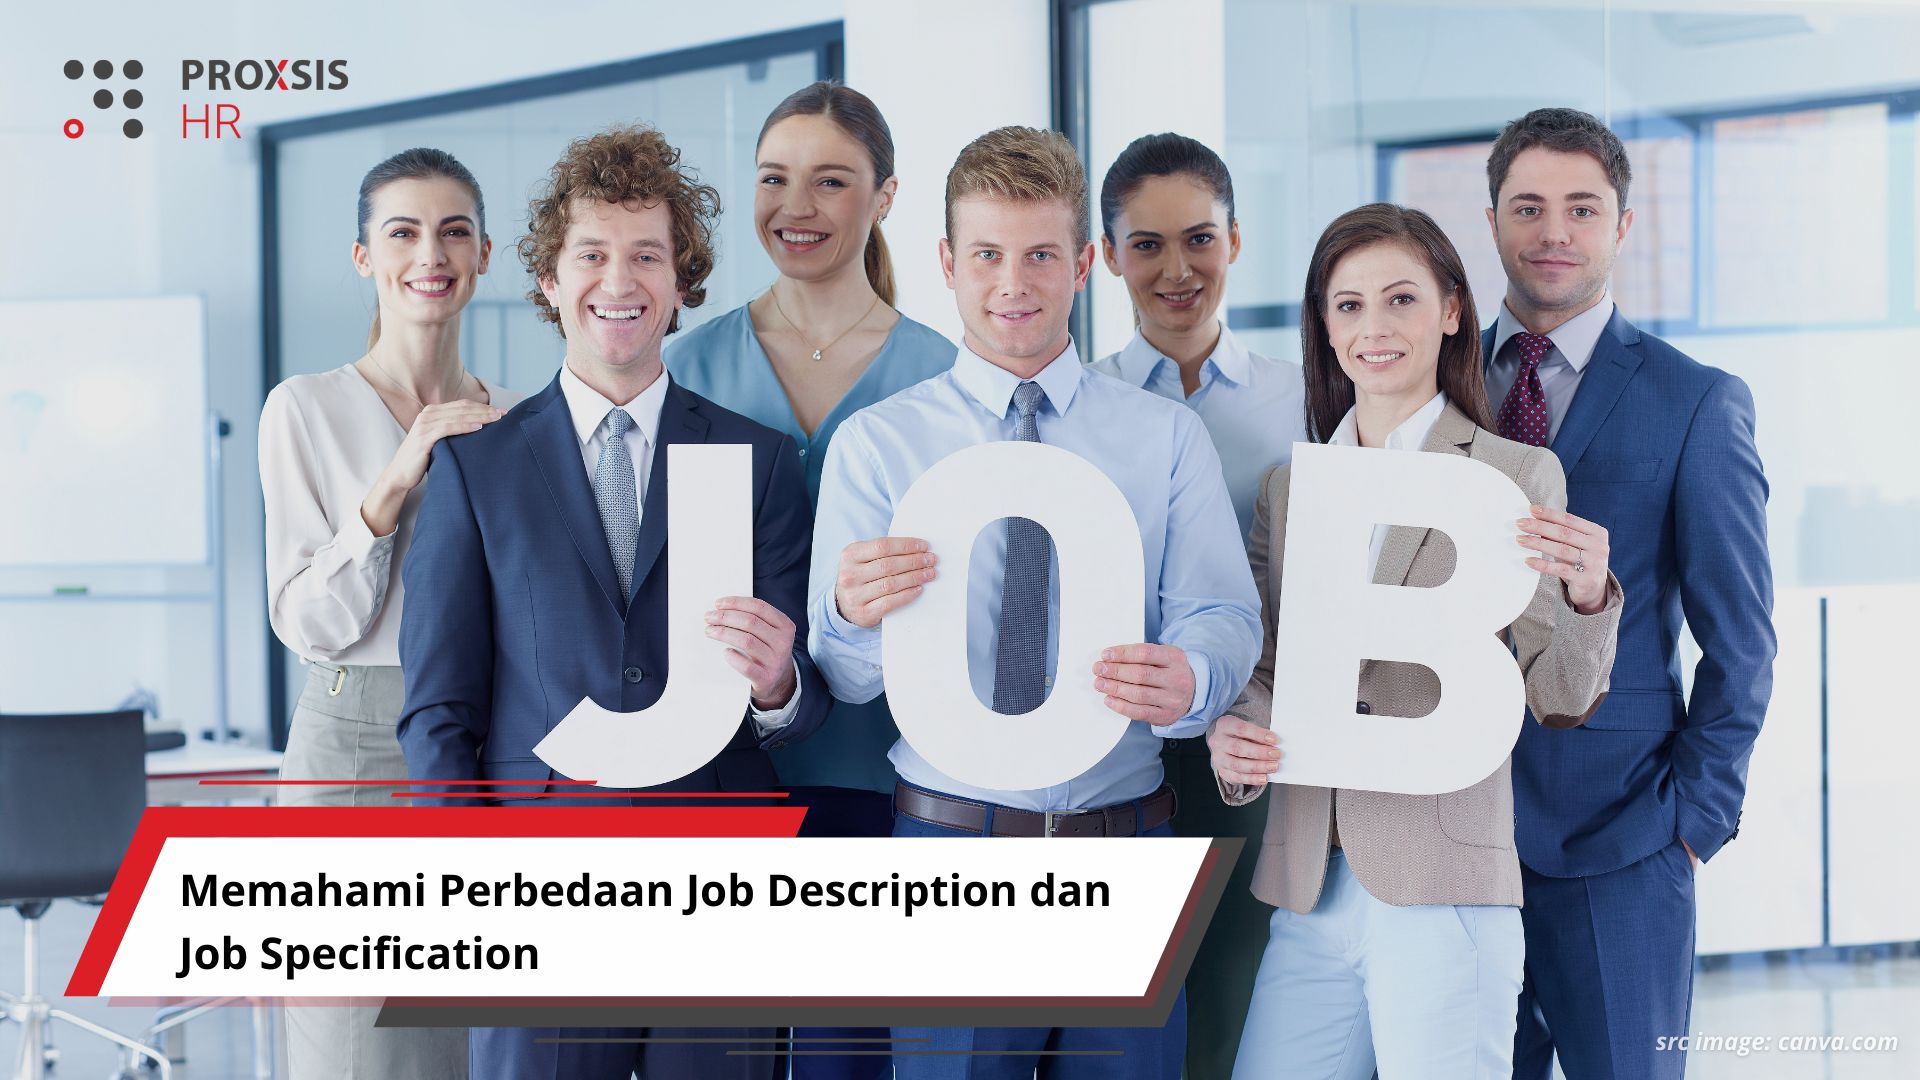 Memahami Perbedaan Job Description dan Job Specification